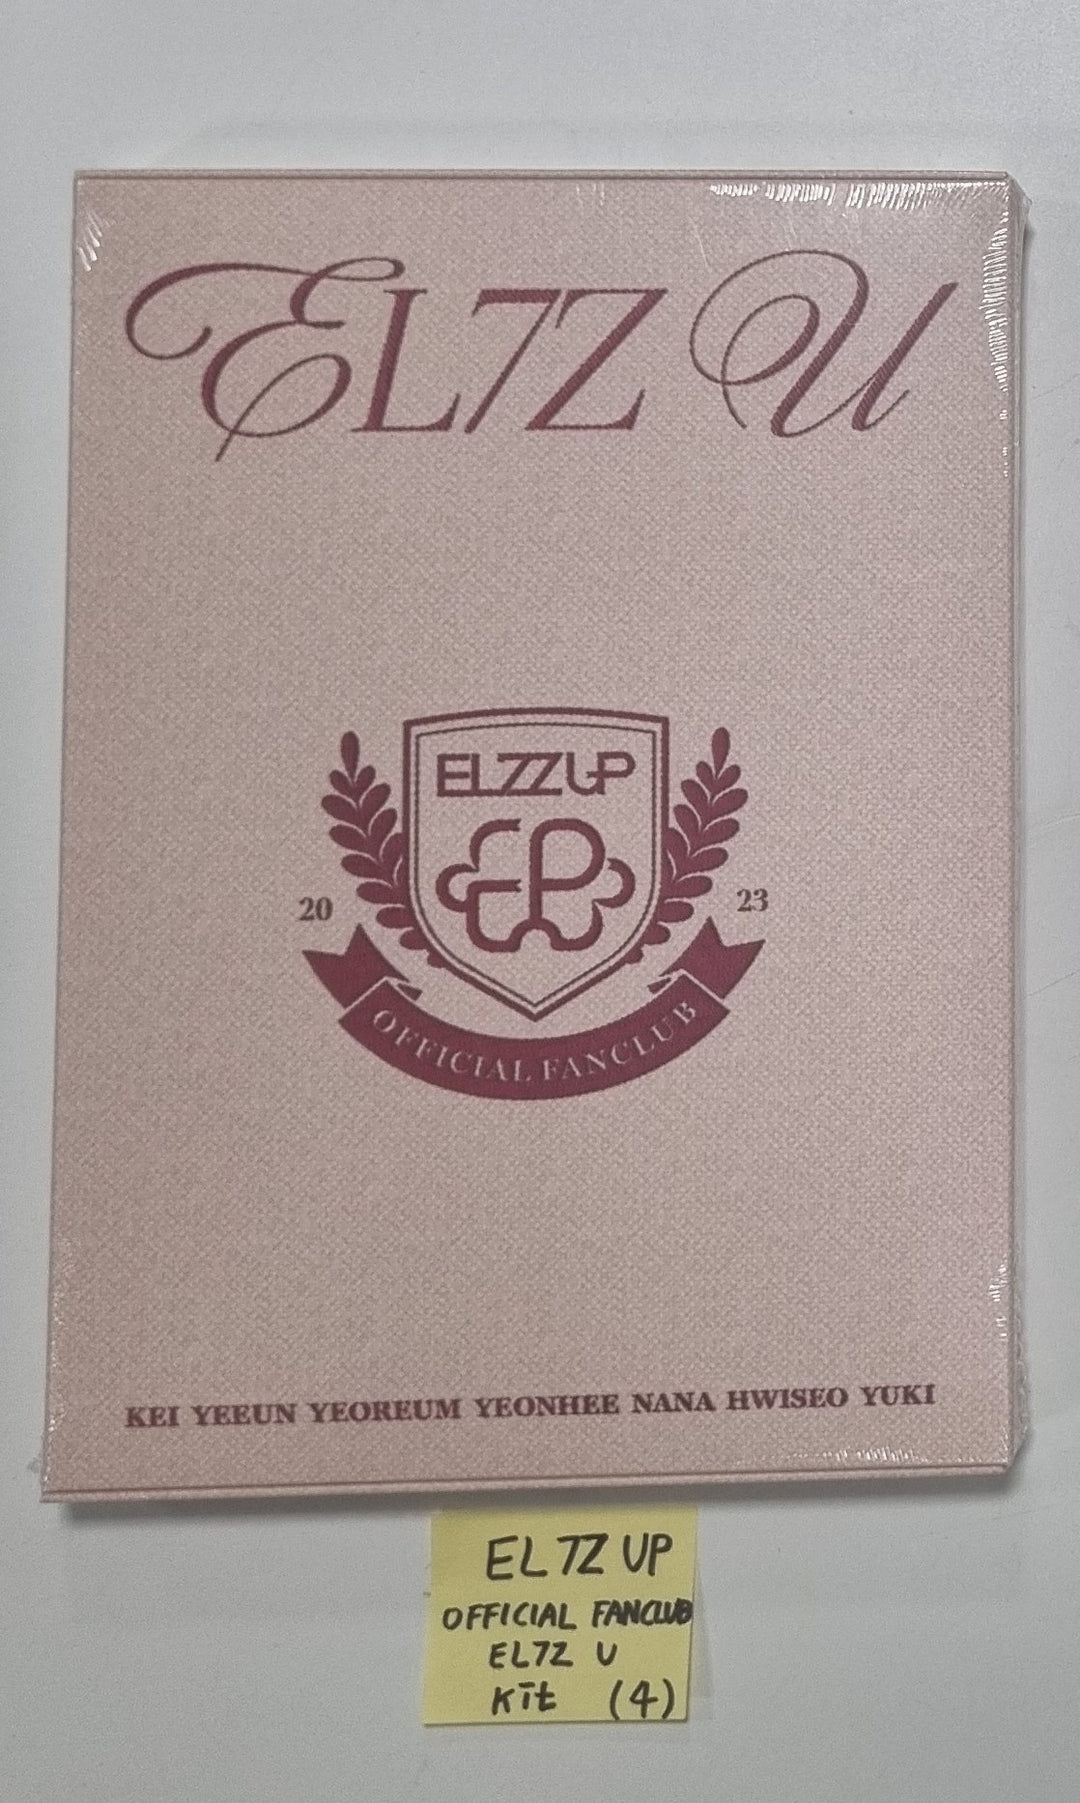 EL7Z UP "EL7Z U" - オフィシャル FANCLUB キット [24.1.10]